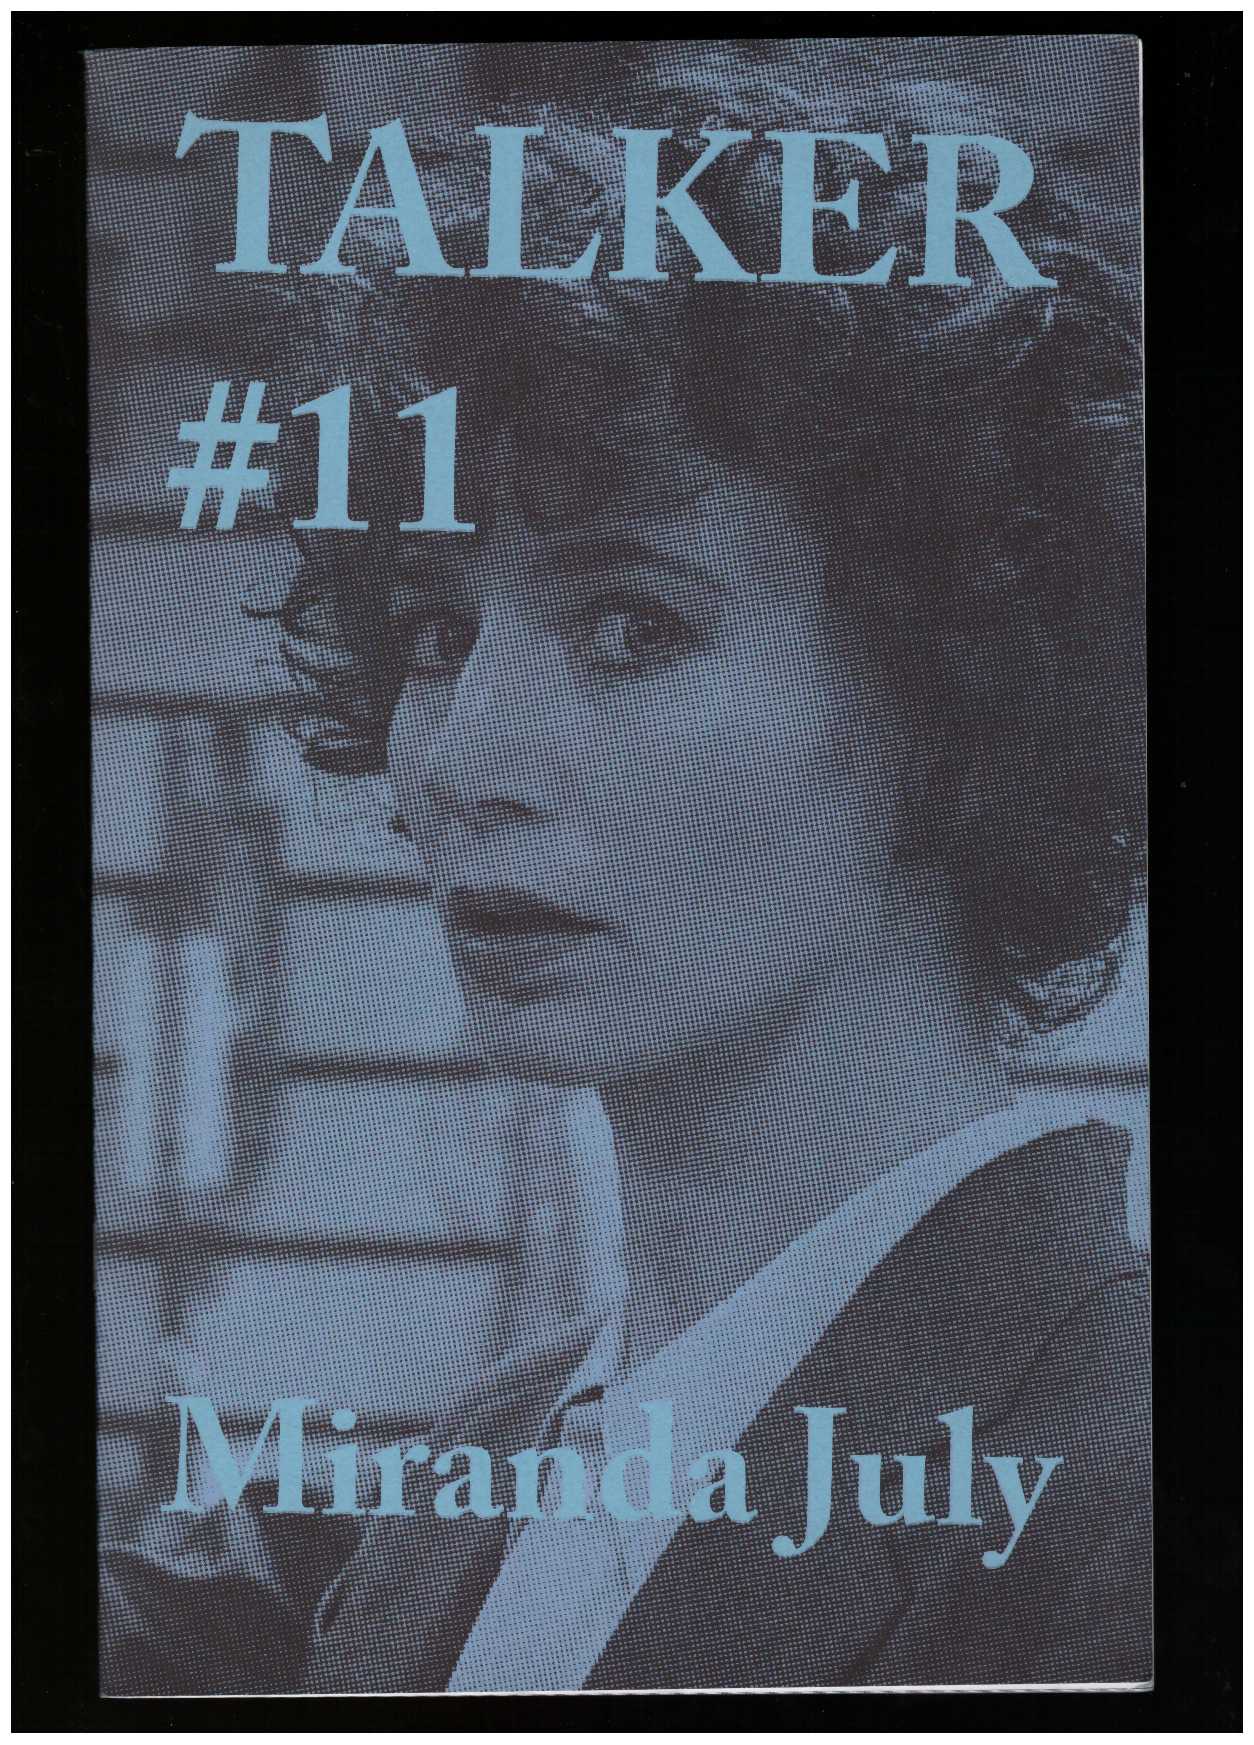 JULY, Miranda; BAILEY, Giles (ed.) - Talker #11: Miranda July